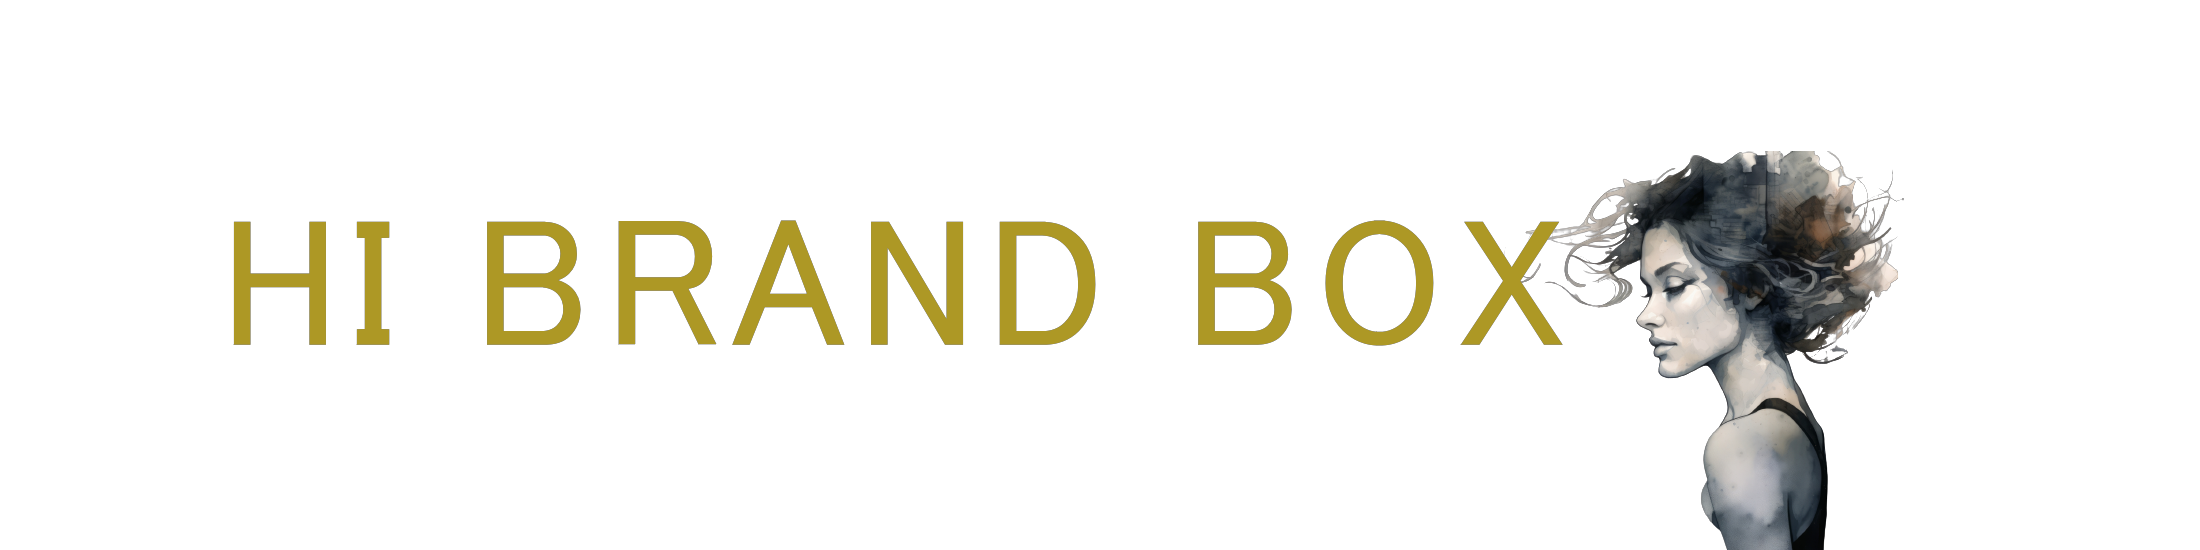 HI BRAND BOX：世界の高級ブランドを探求